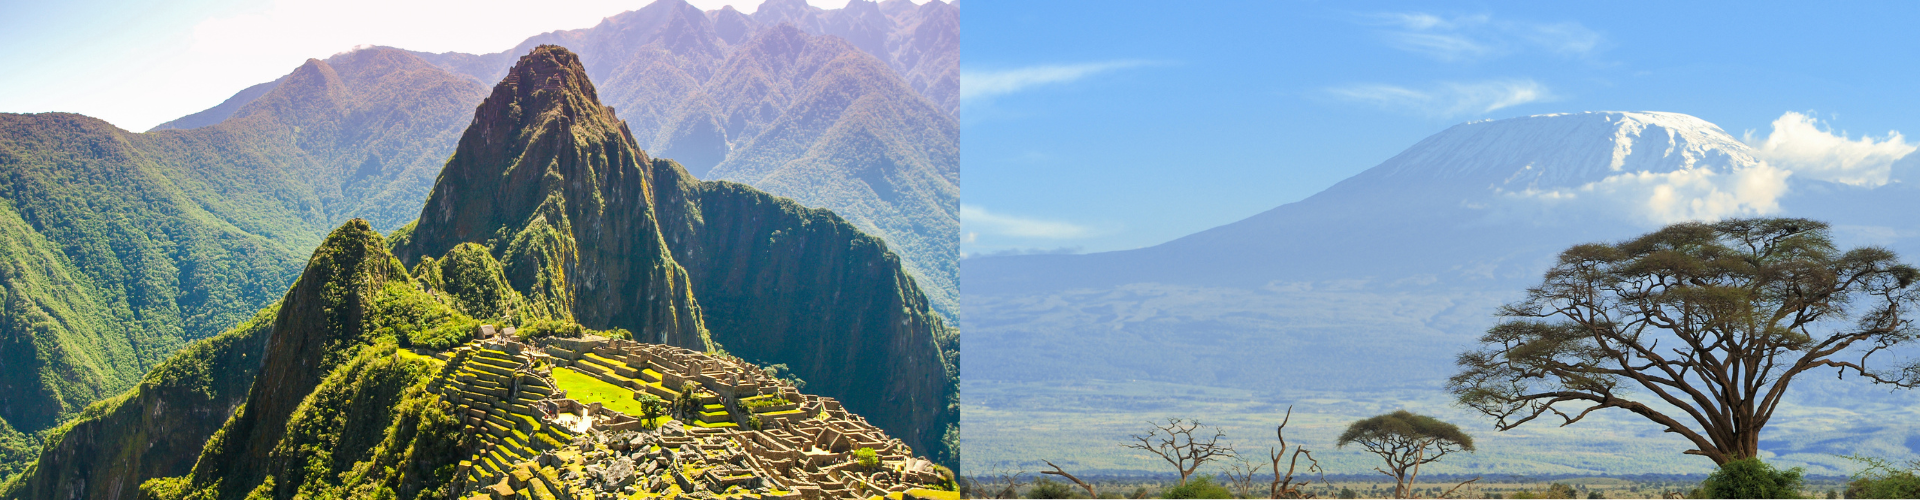 Which is harder, Machu Picchu or Kilimanjaro?